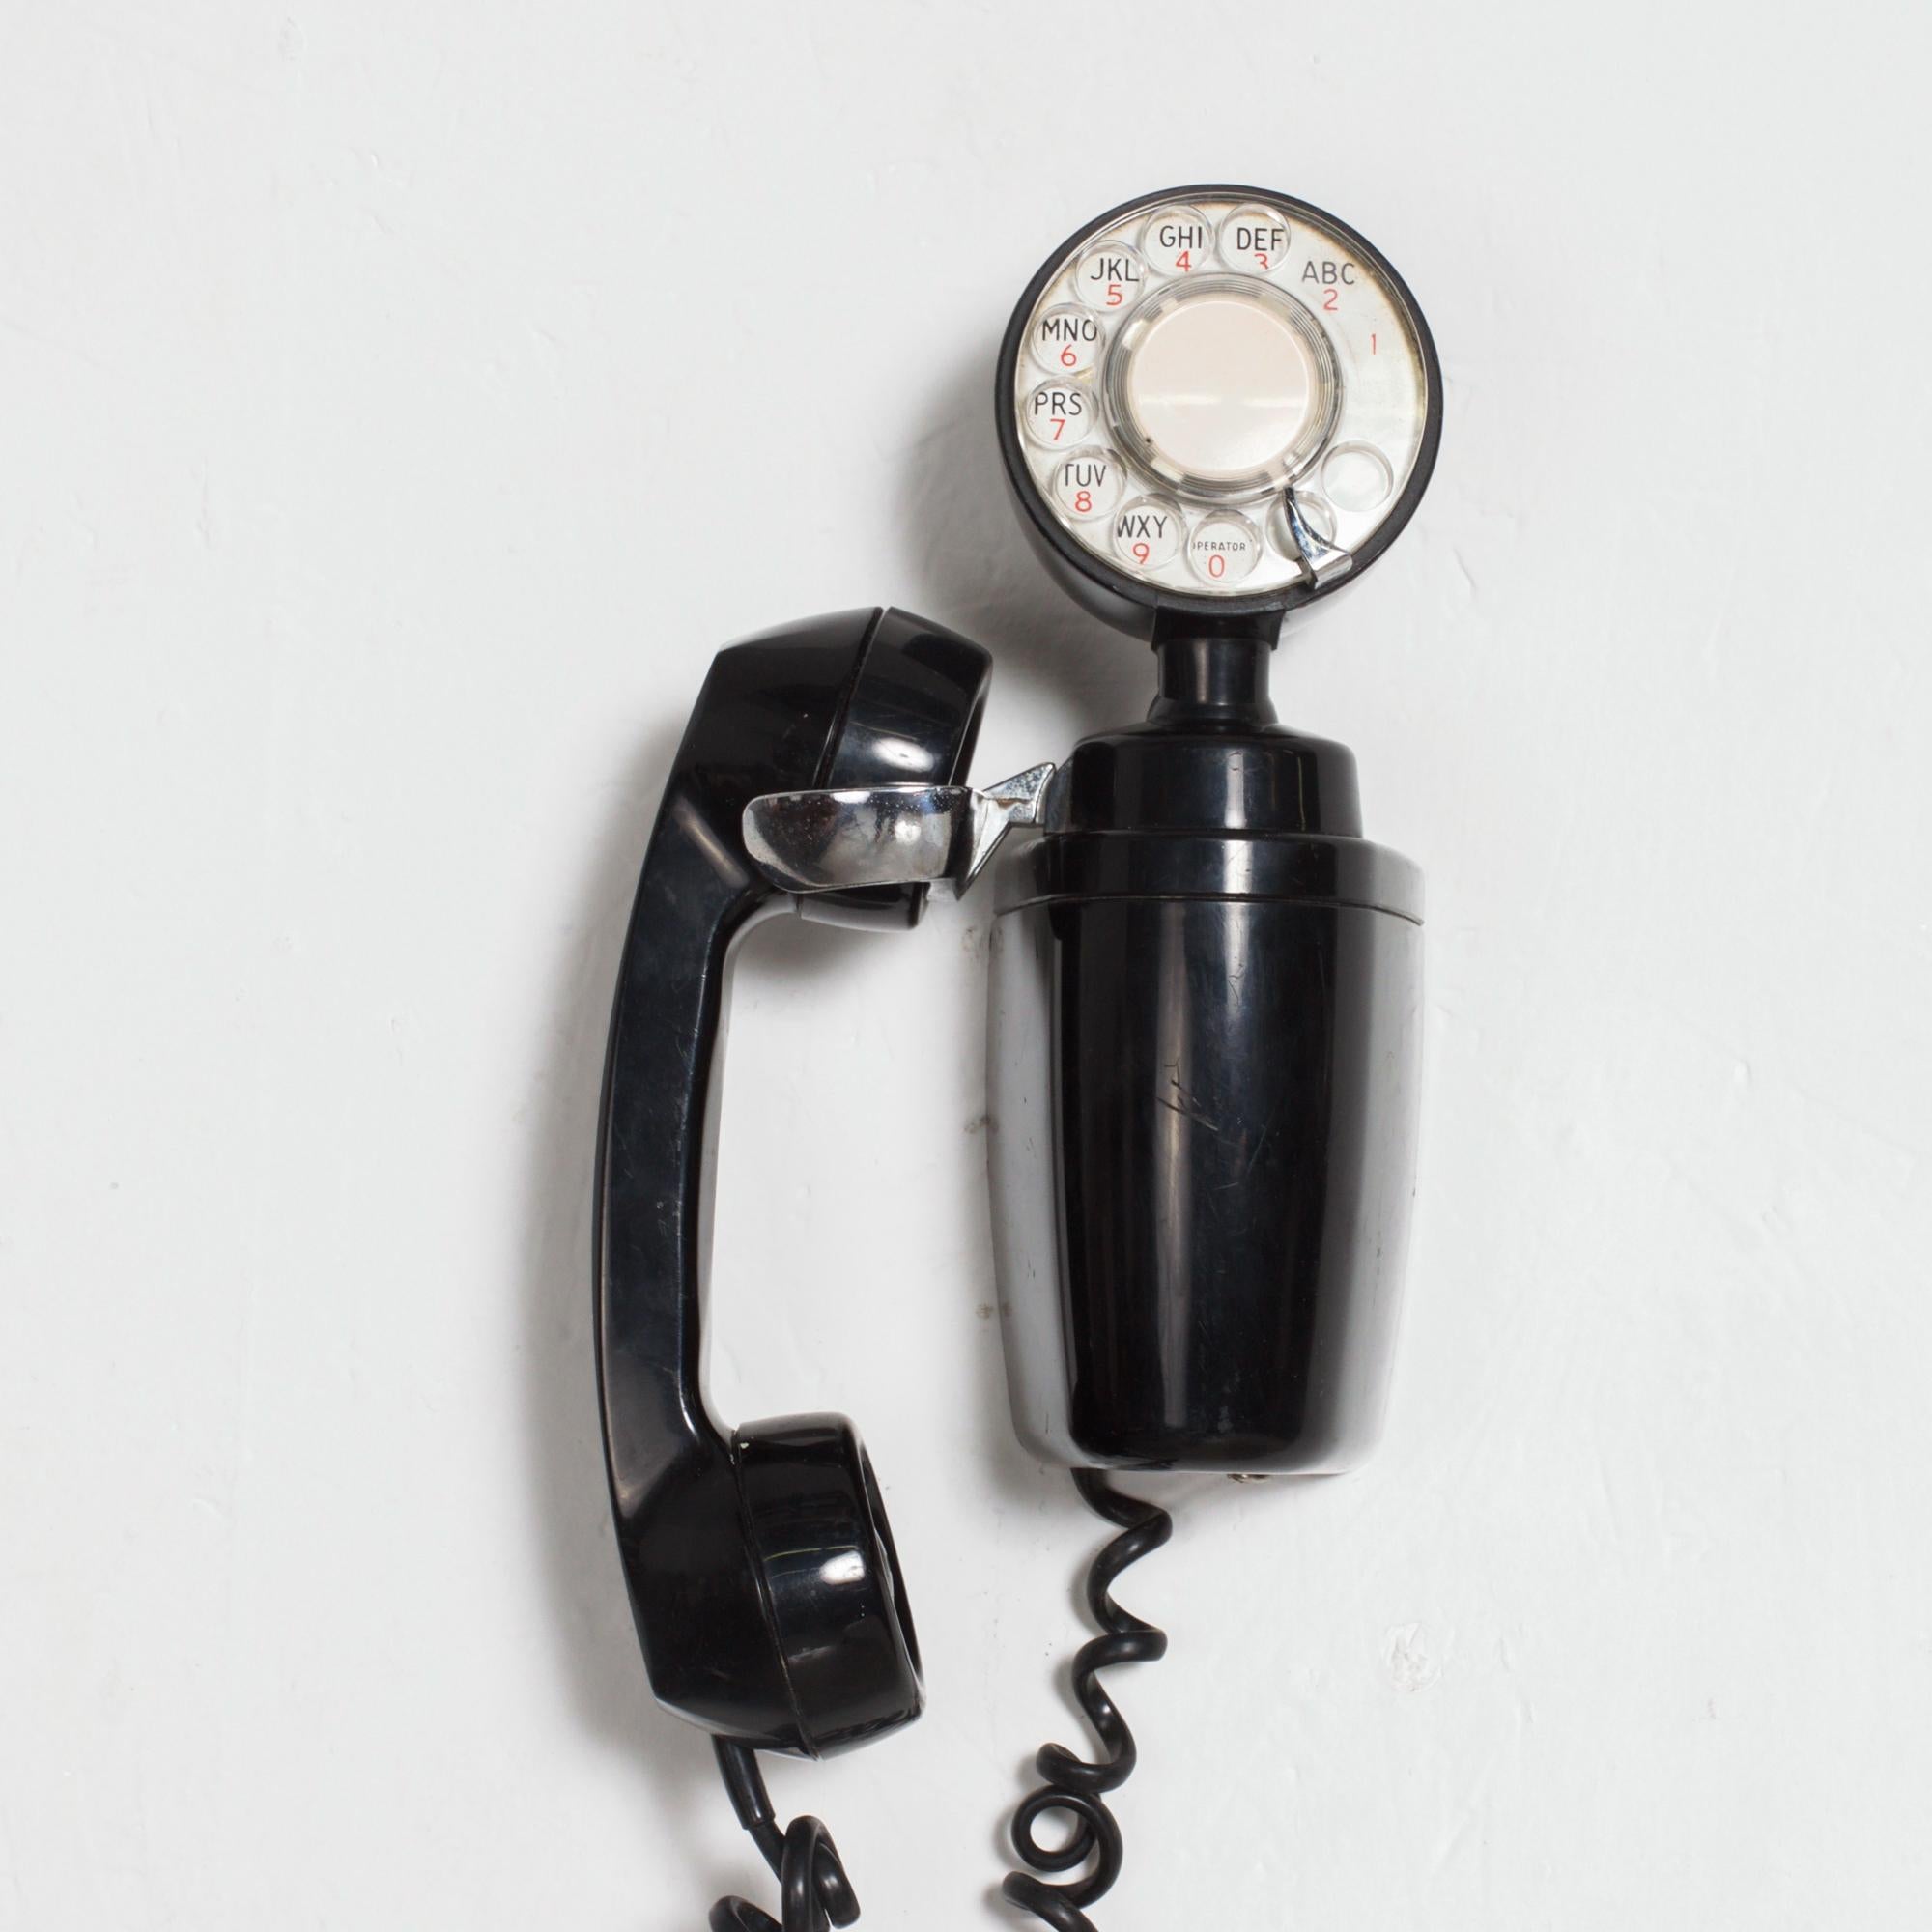 black rotary wall phone